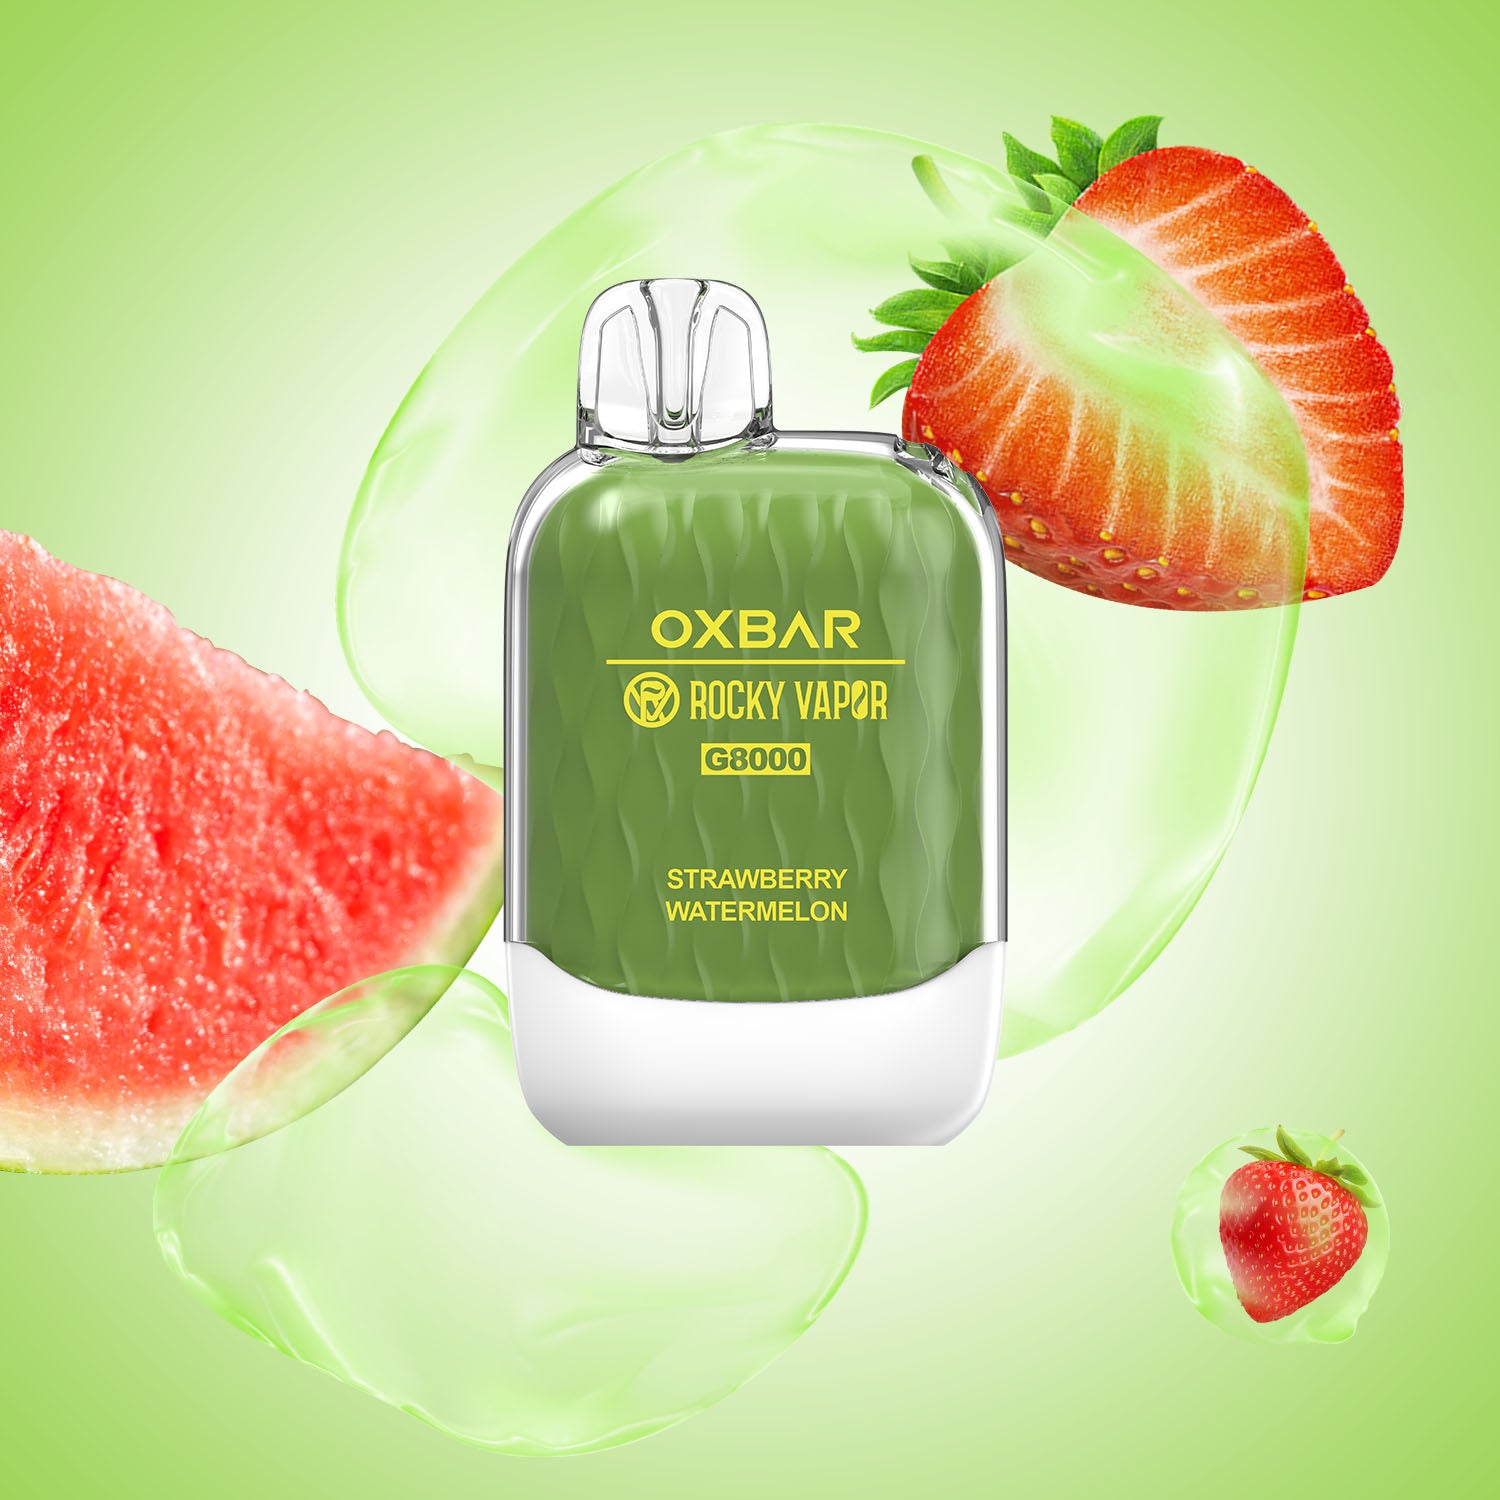 Strawberry Watermelon - OXBAR G8000 - 20mg - 5pc/box